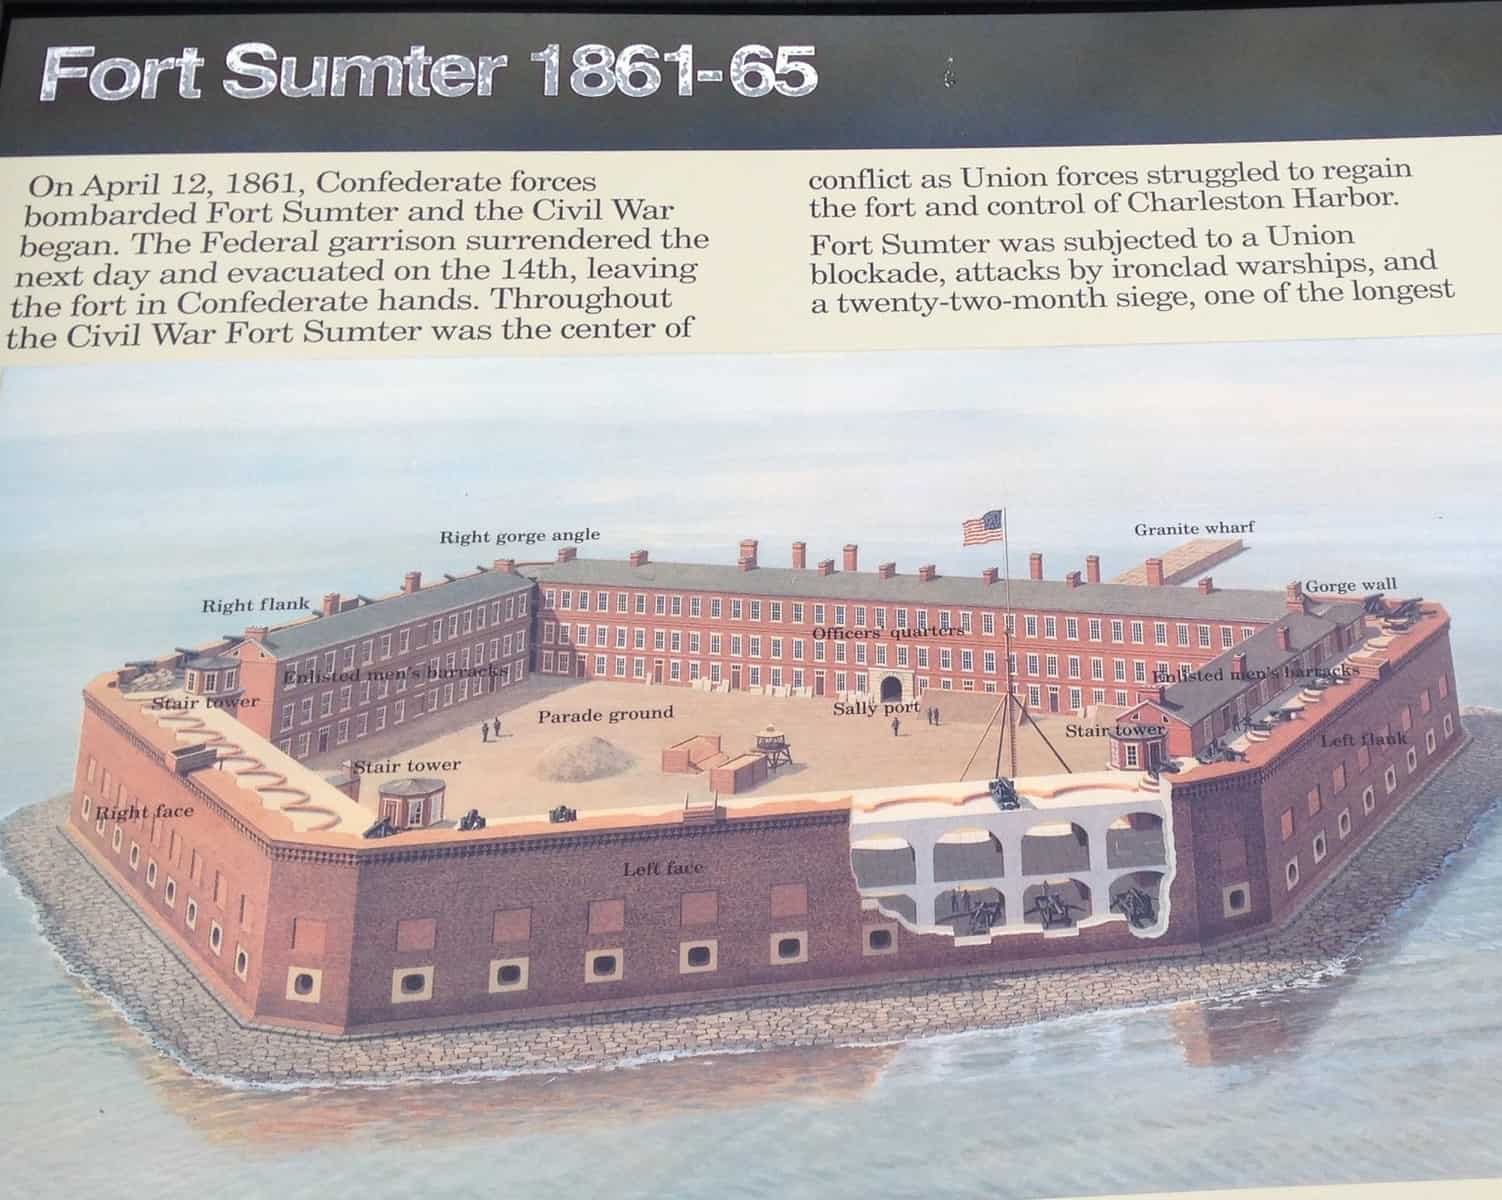 Fort Sumter National Park in Charleston, SC